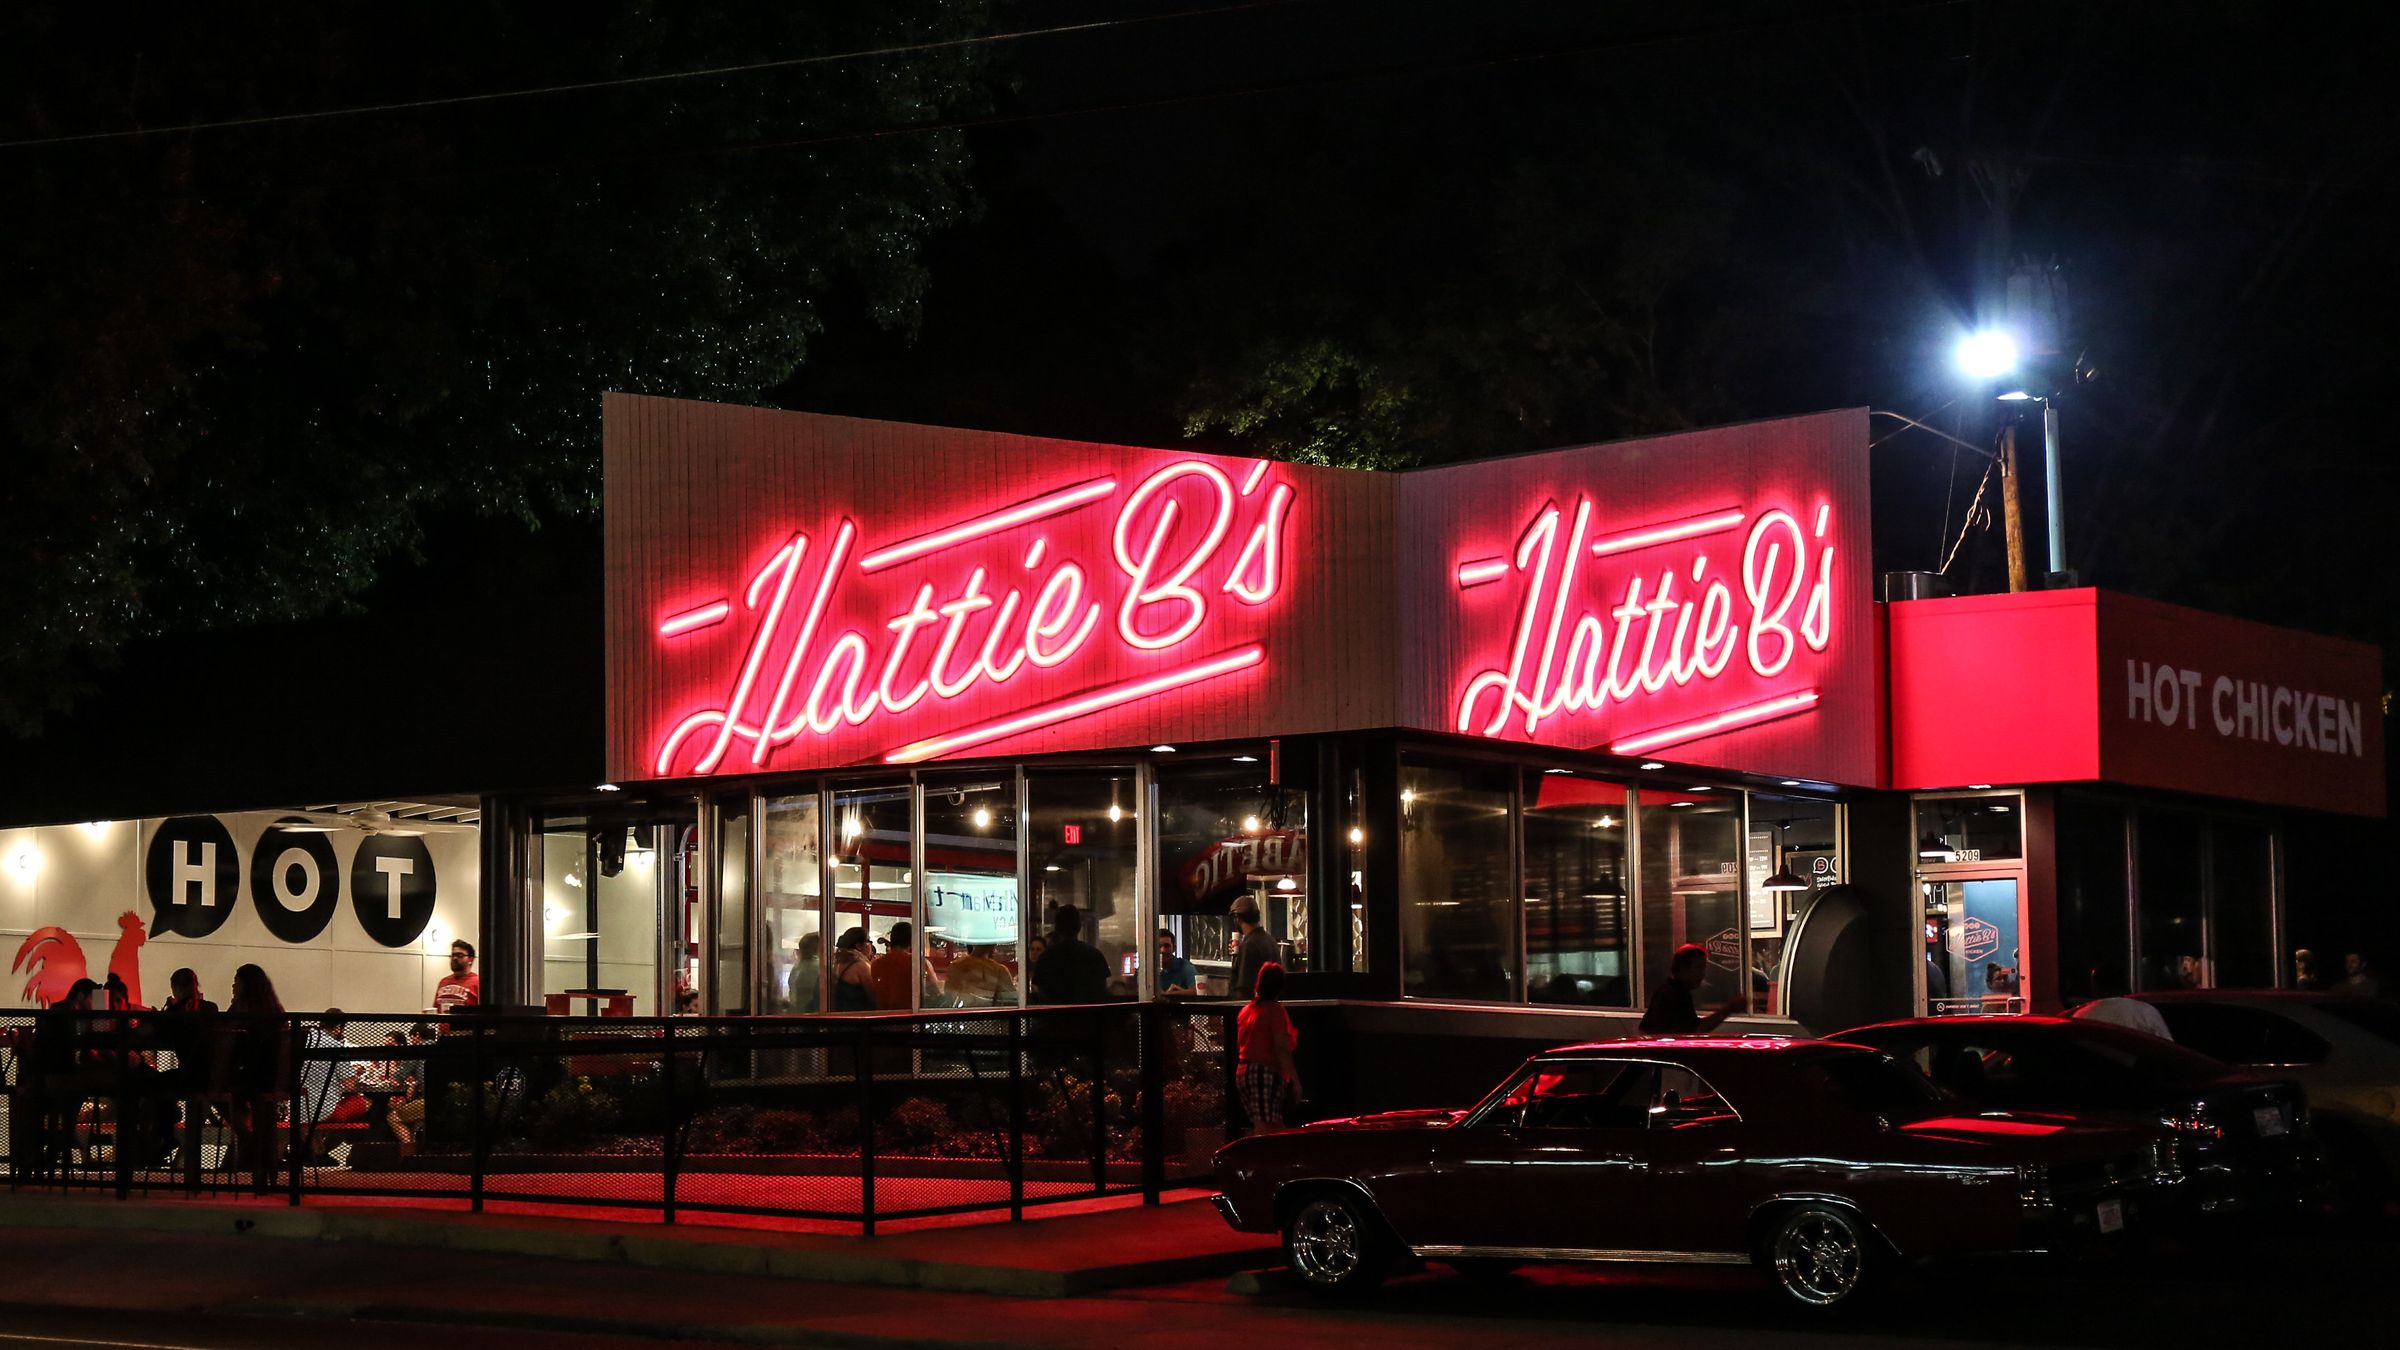 Exterior of Hattie B's in Nashville.